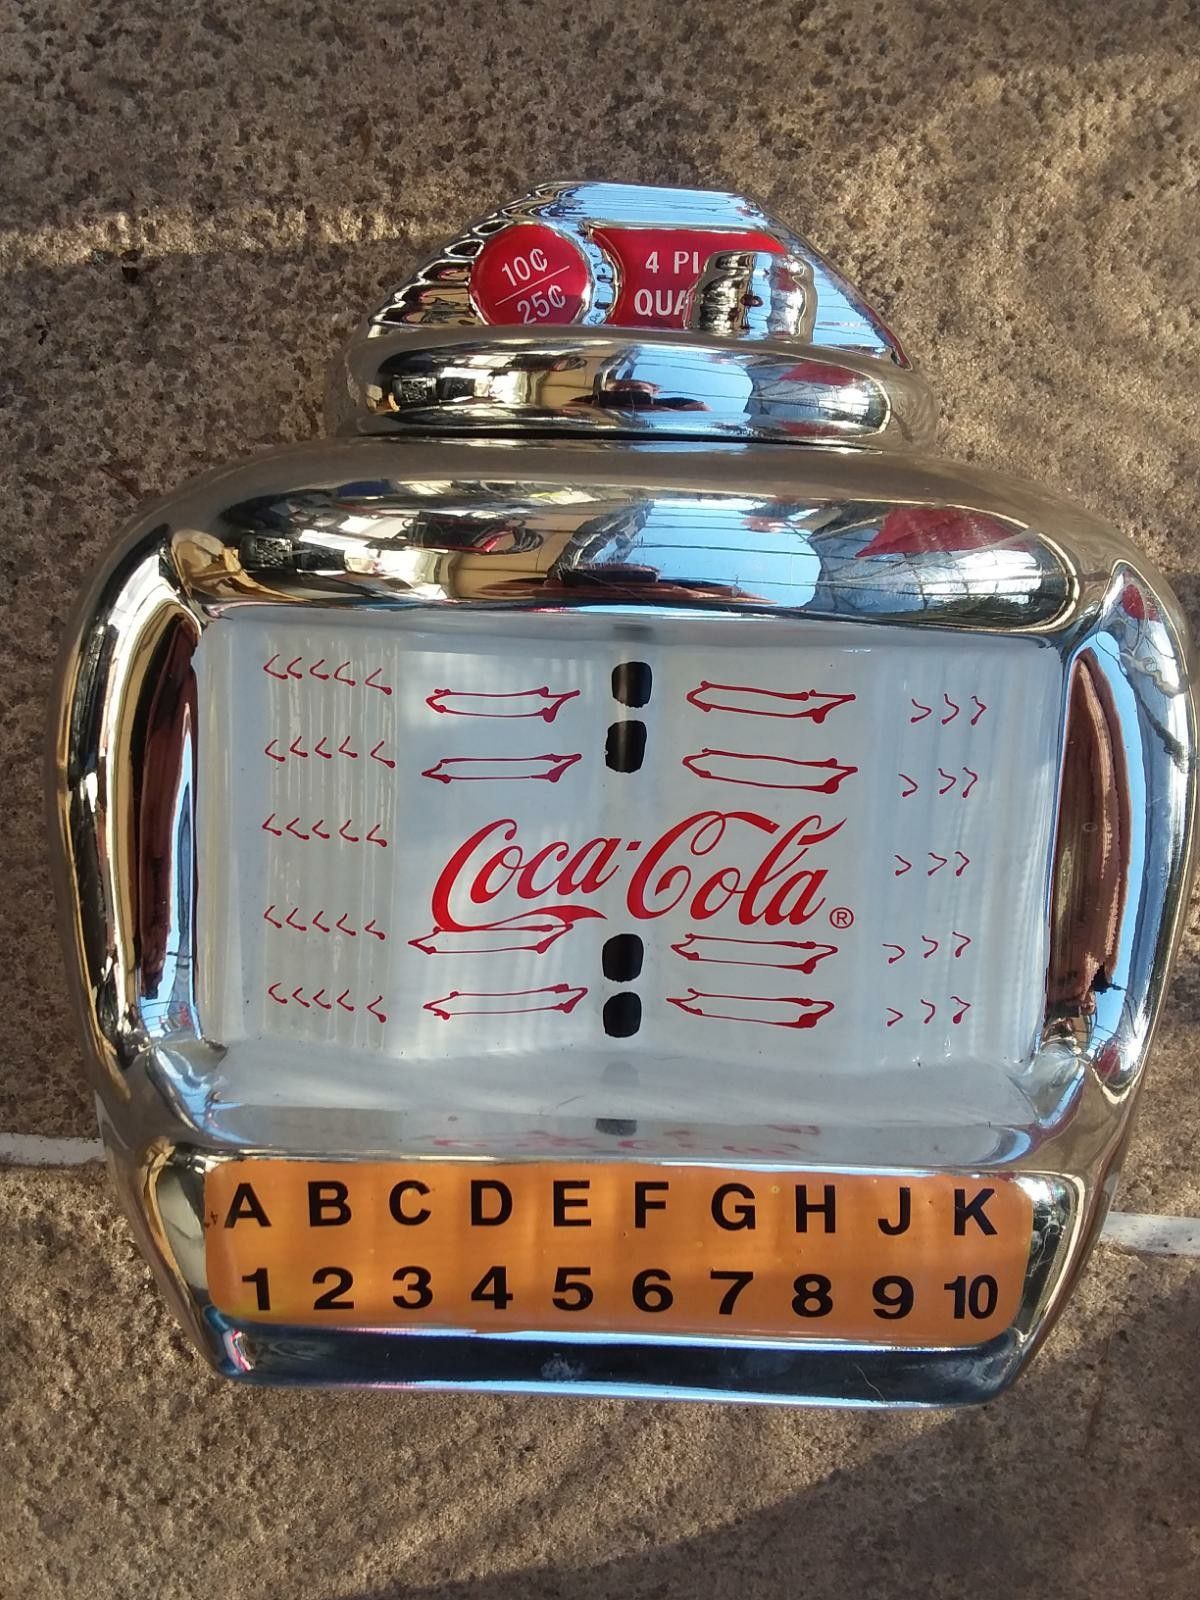 Coca cola coke jukebox cookie jar